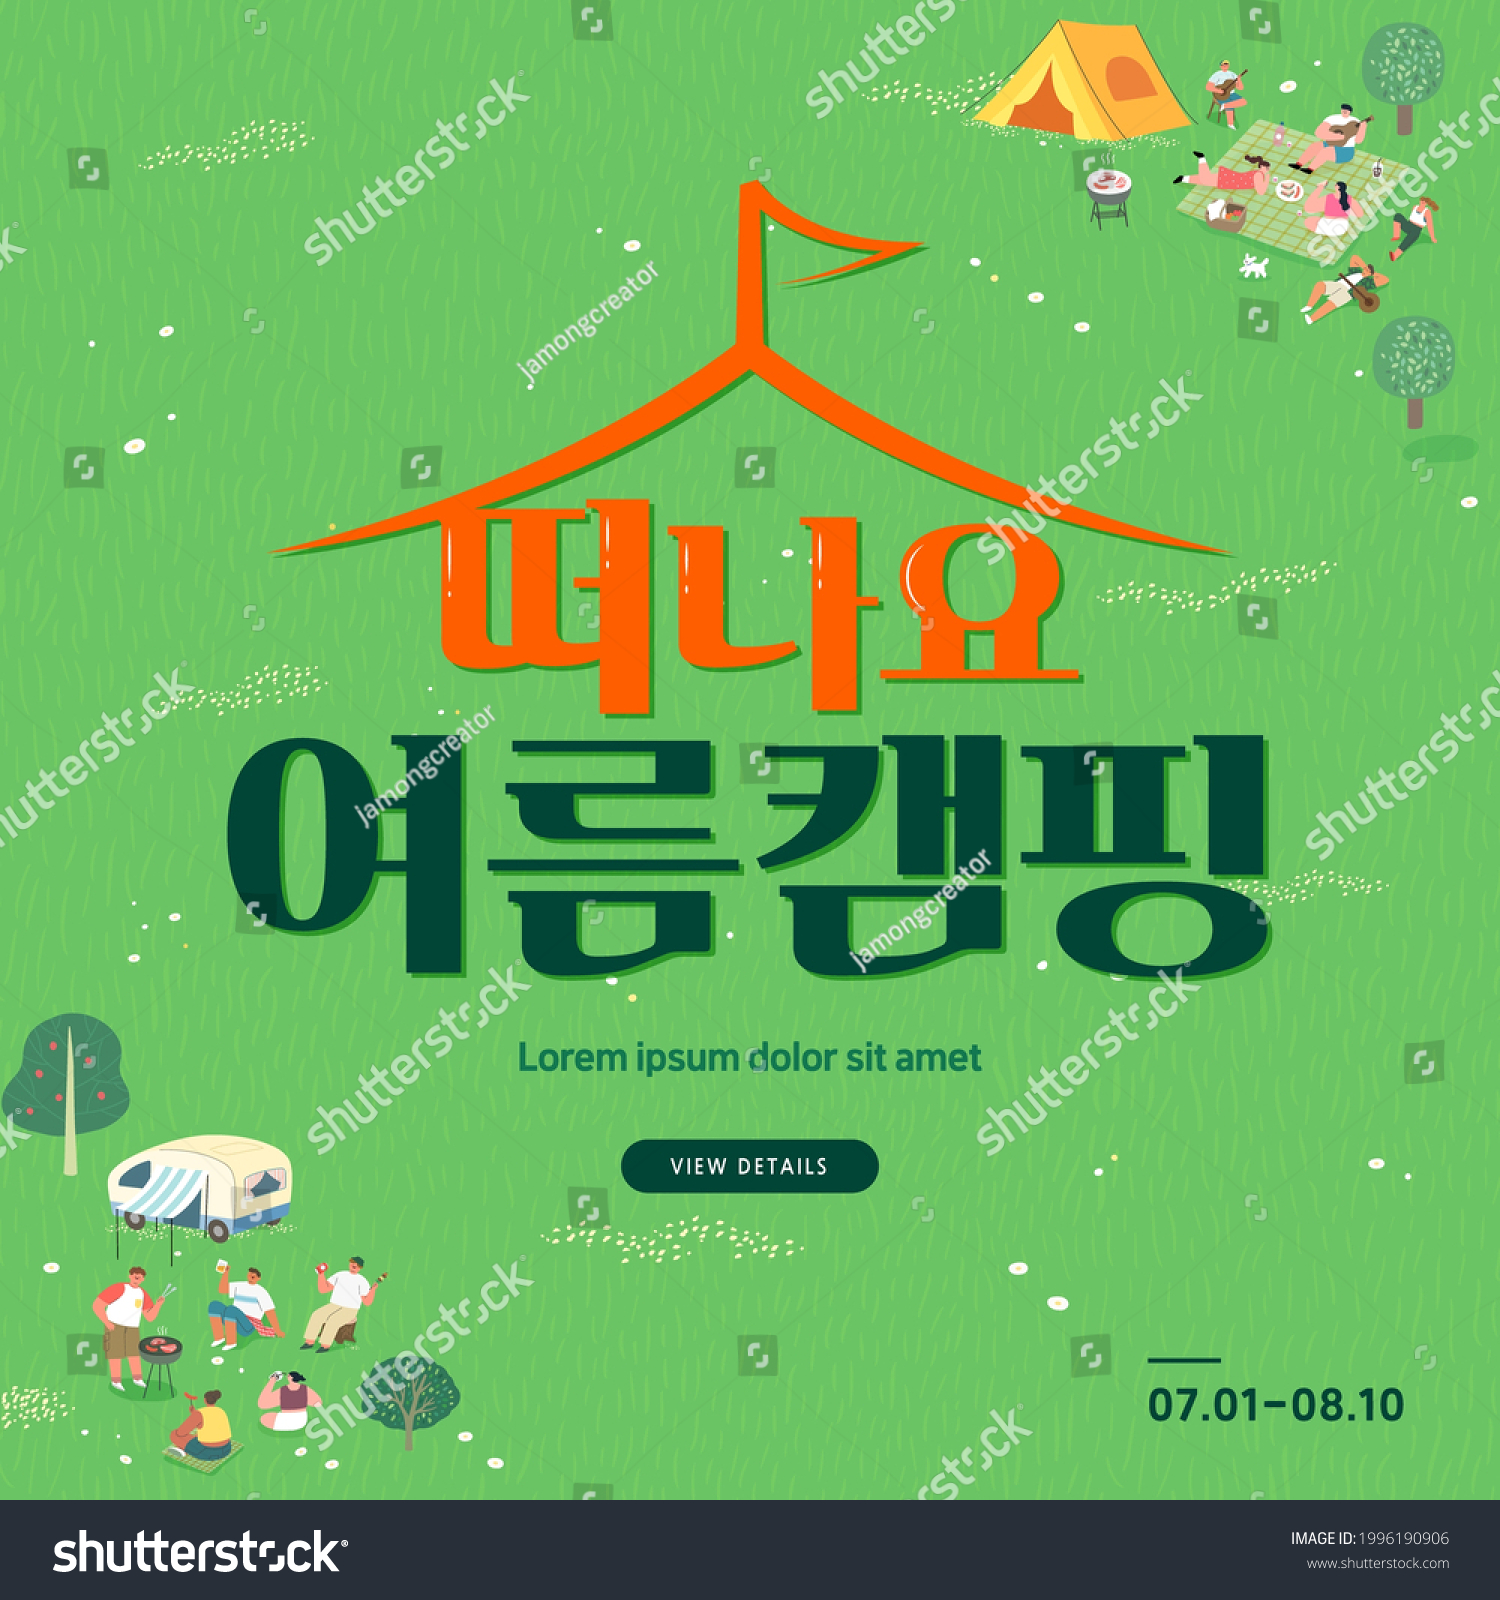 SVG of summer shopping event illustration. Banner. Typography. Korean Translation: 